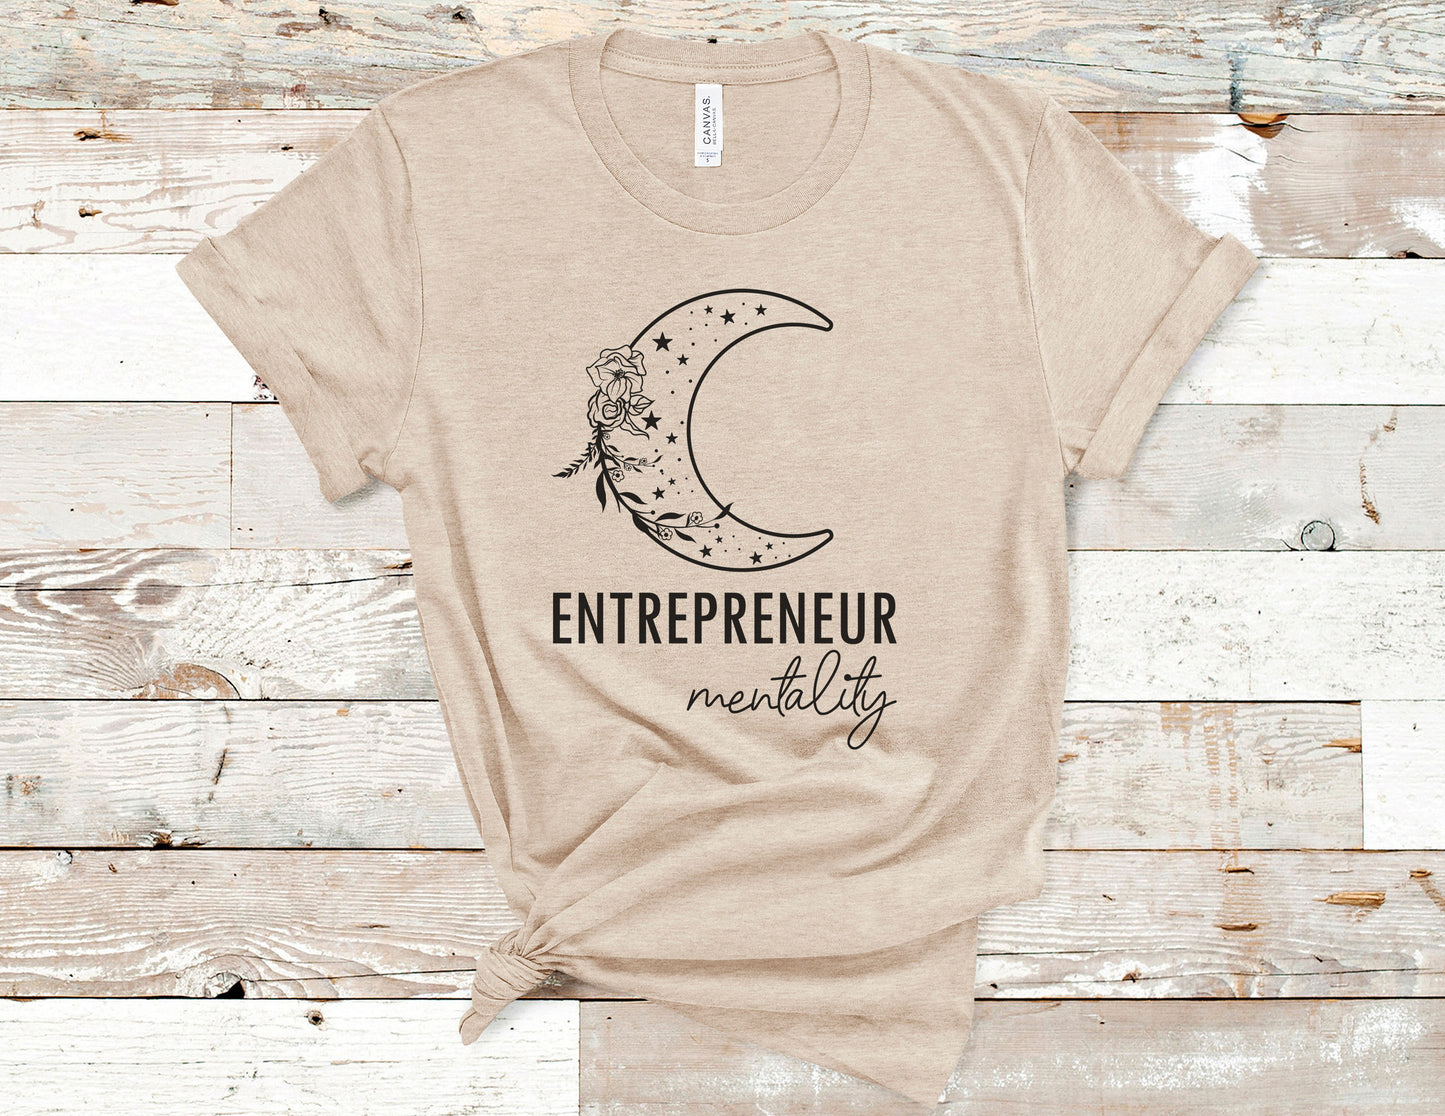 Entrepreneur Mentality Moon Tee